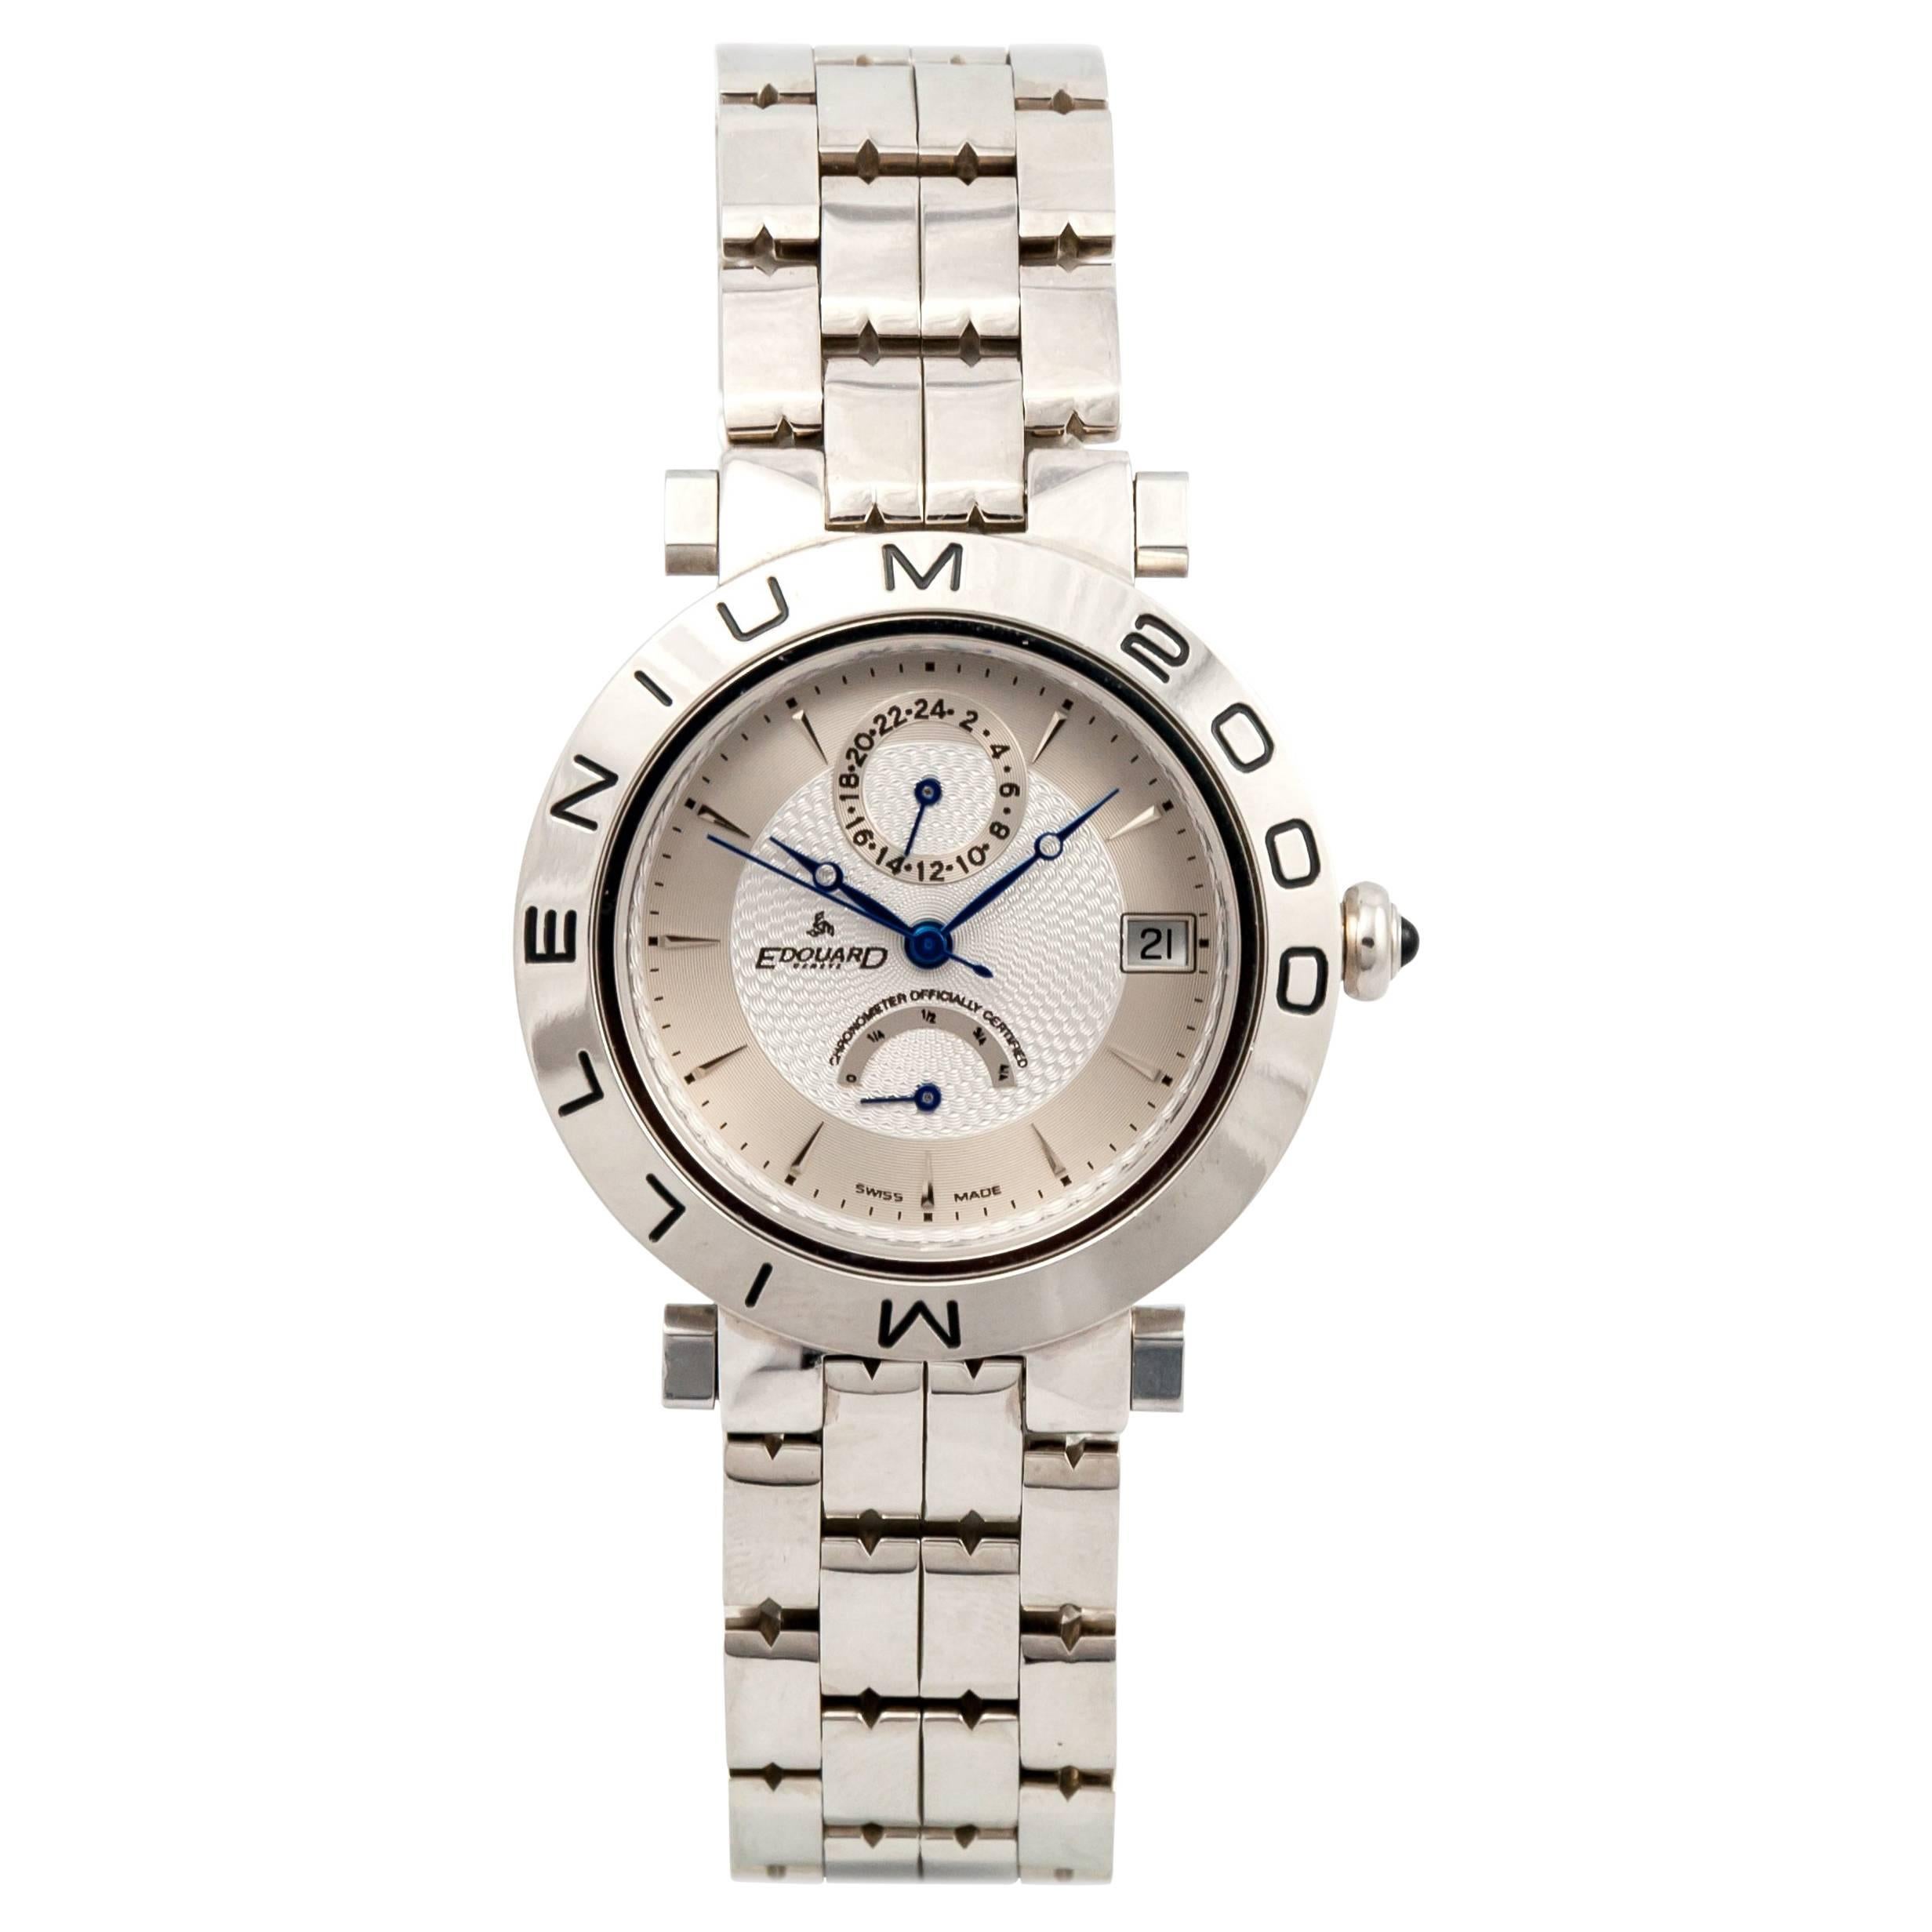 Edouard stainless Steel Millenium 2000 Automatic Wristwatch